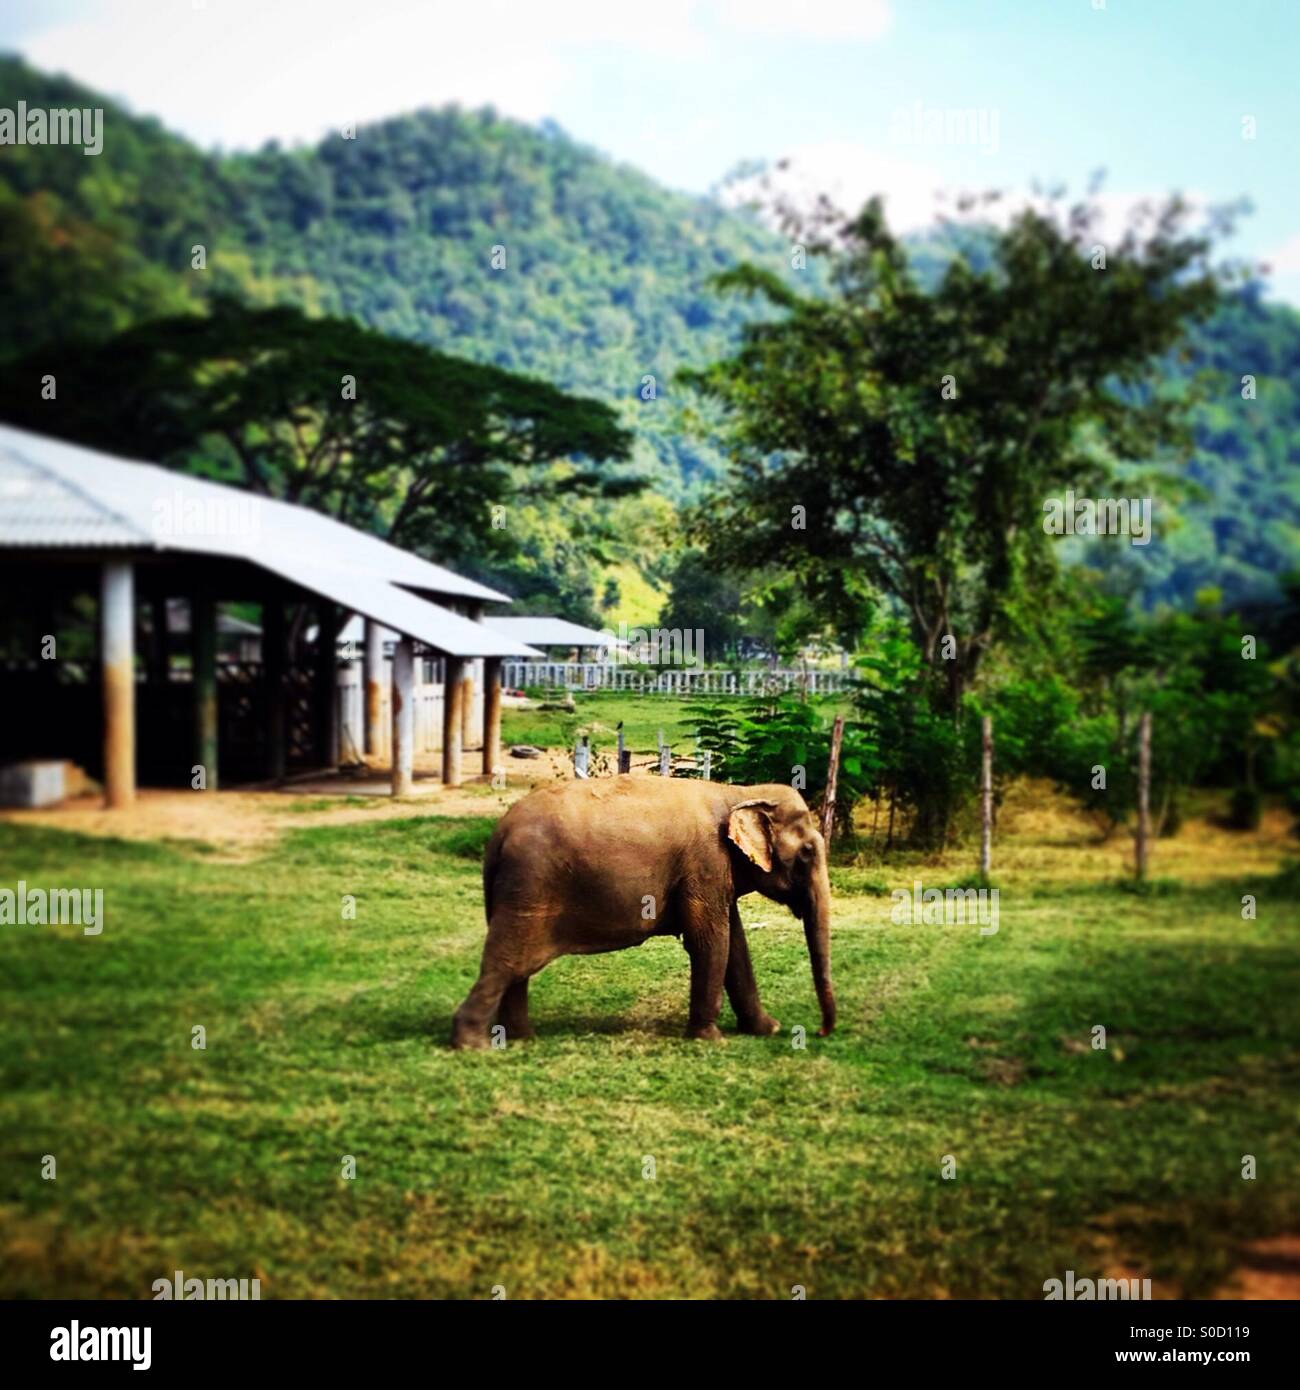 Elephant in Thailand Stock Photo